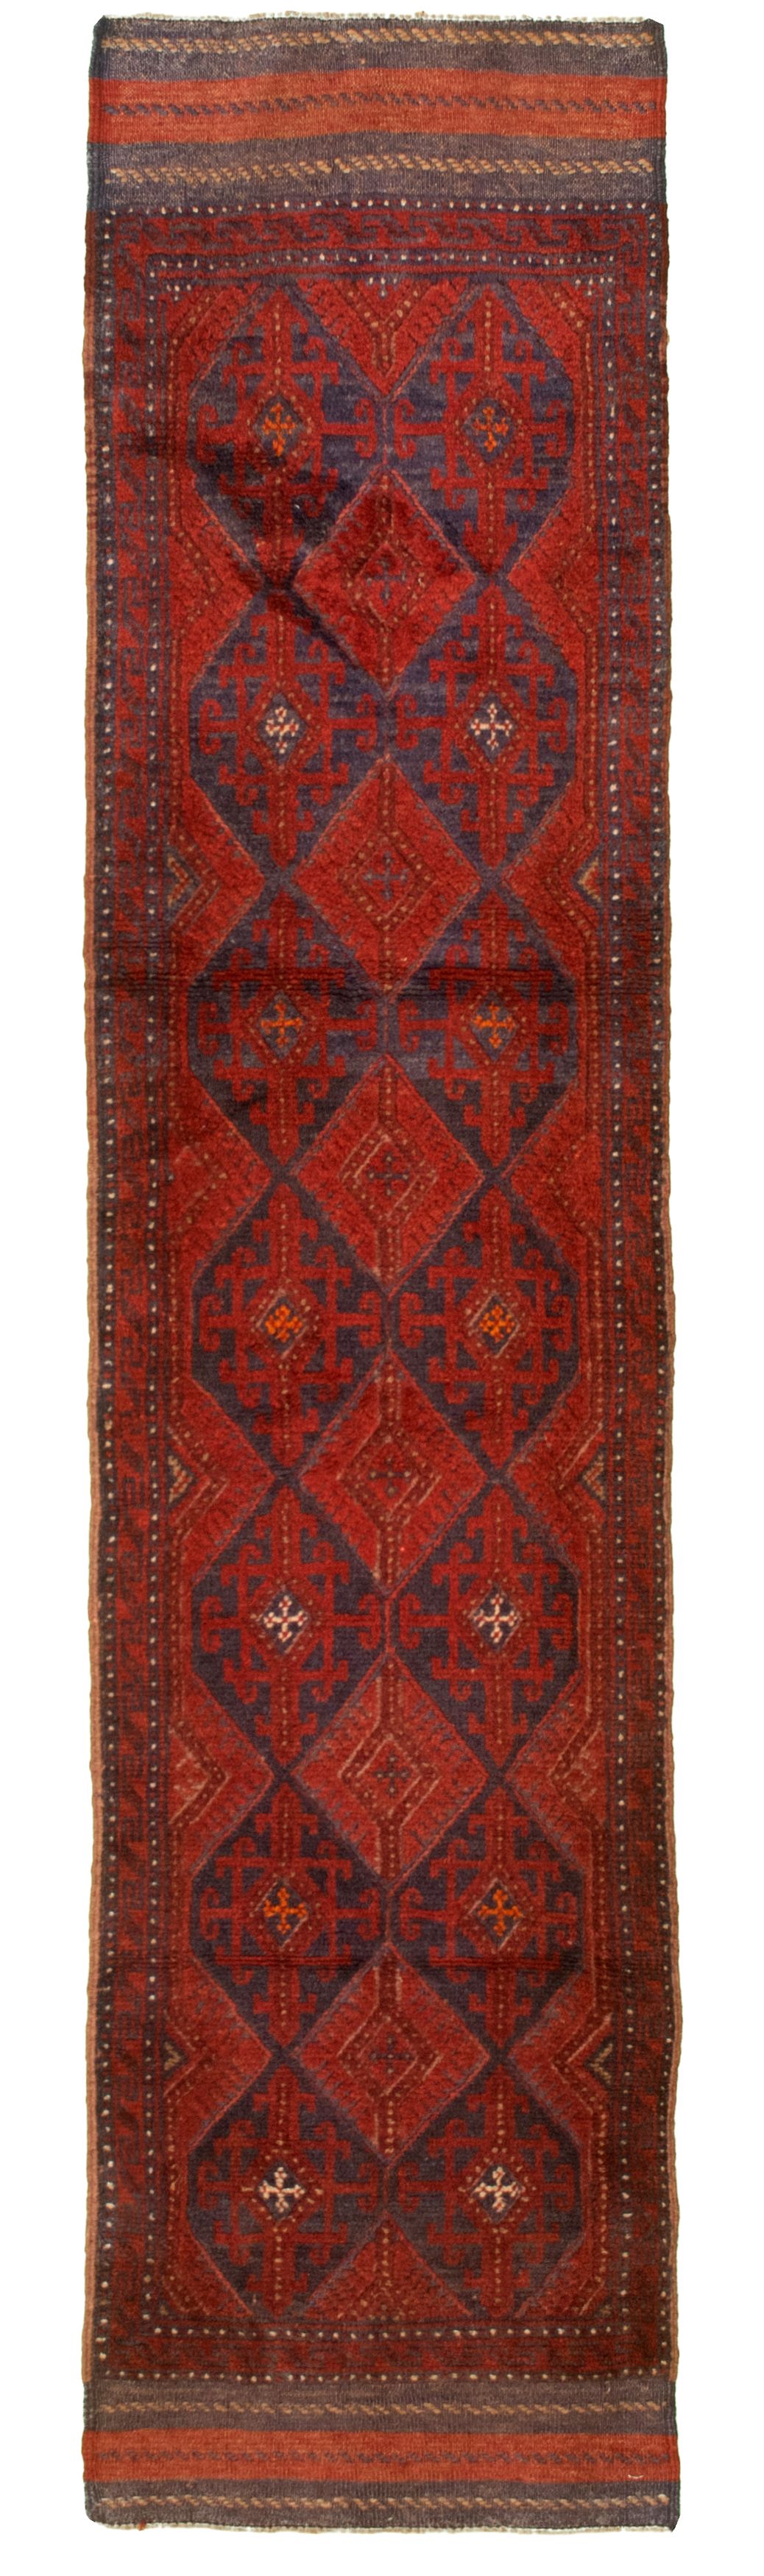 Hand-knotted Tajik Caucasian Dark Navy Wool Rug 2'1" x 8'10" Size: 2'1" x 8'10"  